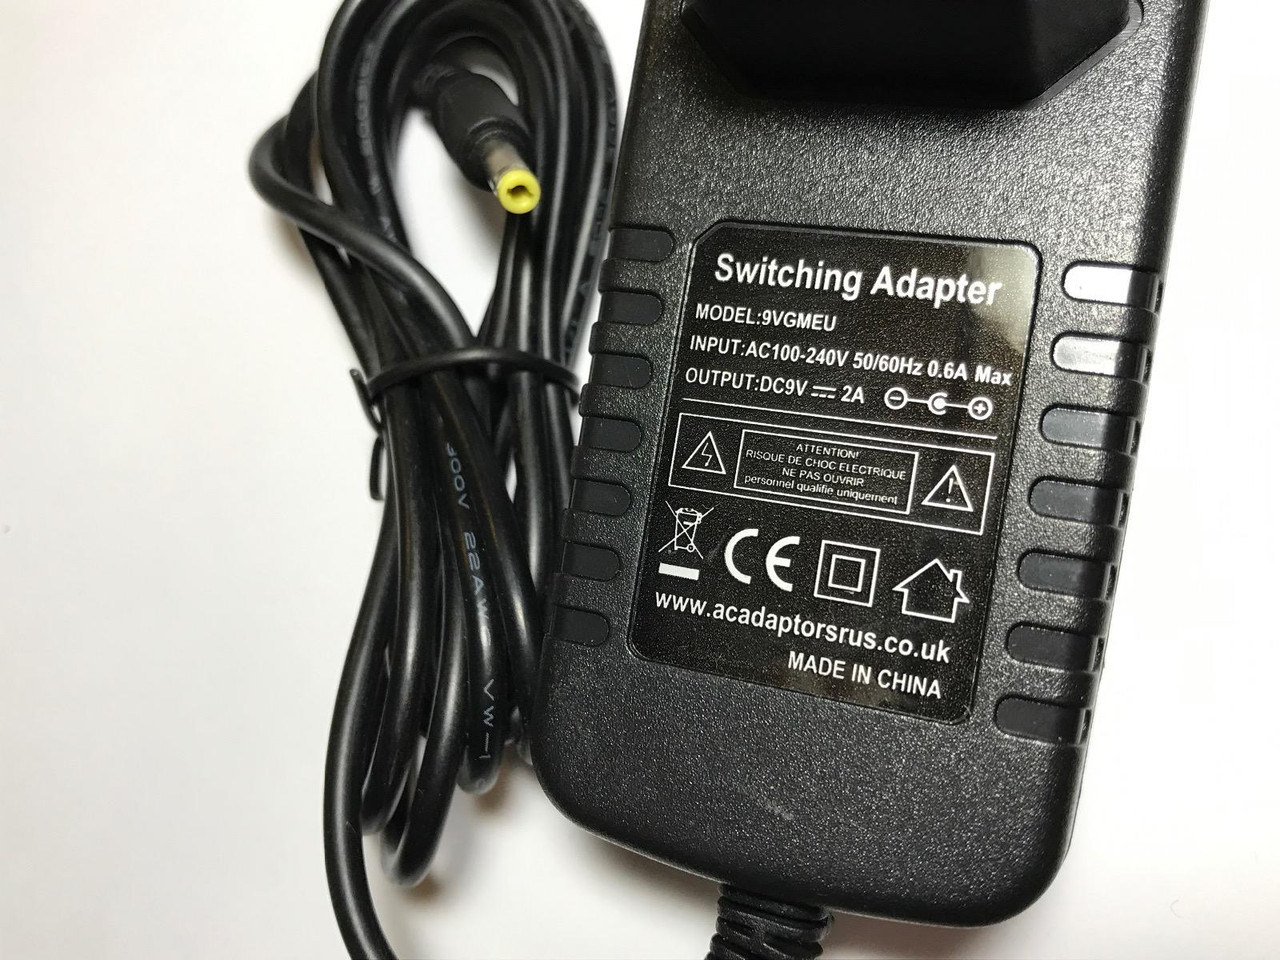 Akai 9V Akai AKK 7900 portable dvd player UK Mains Power Supply Adapter Charger NEW 